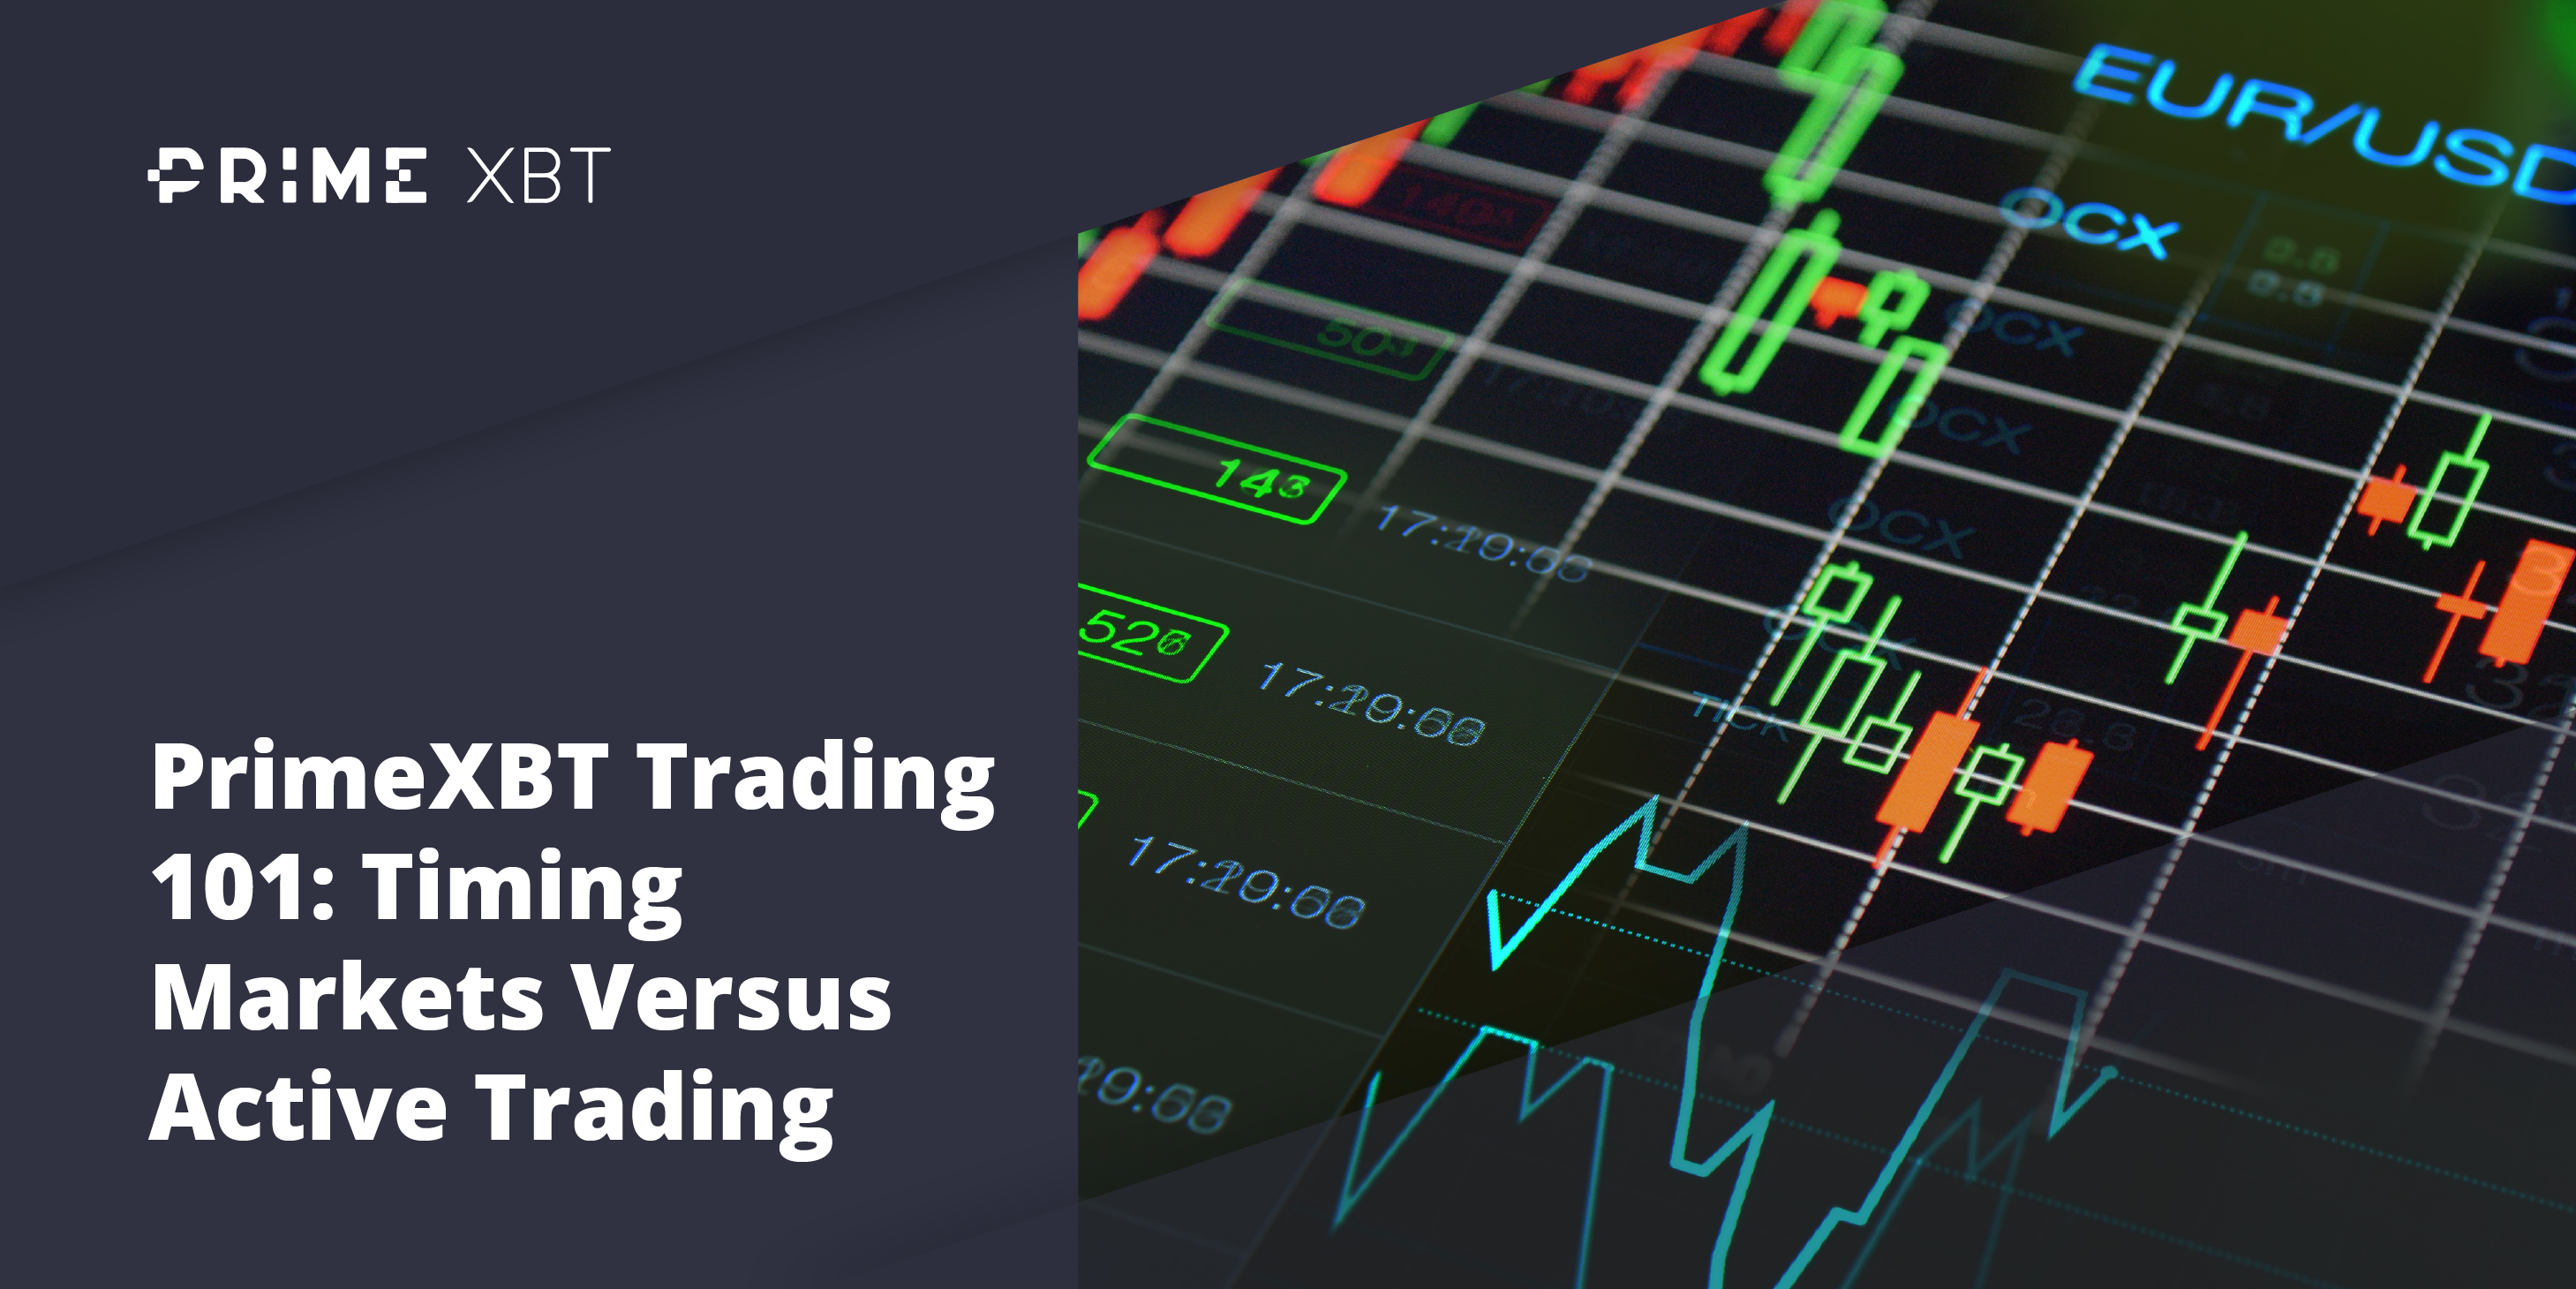 PrimeXBT Trading 101: Timing Markets Versus Active Trading - 2020 blog primexbt 06.03.20